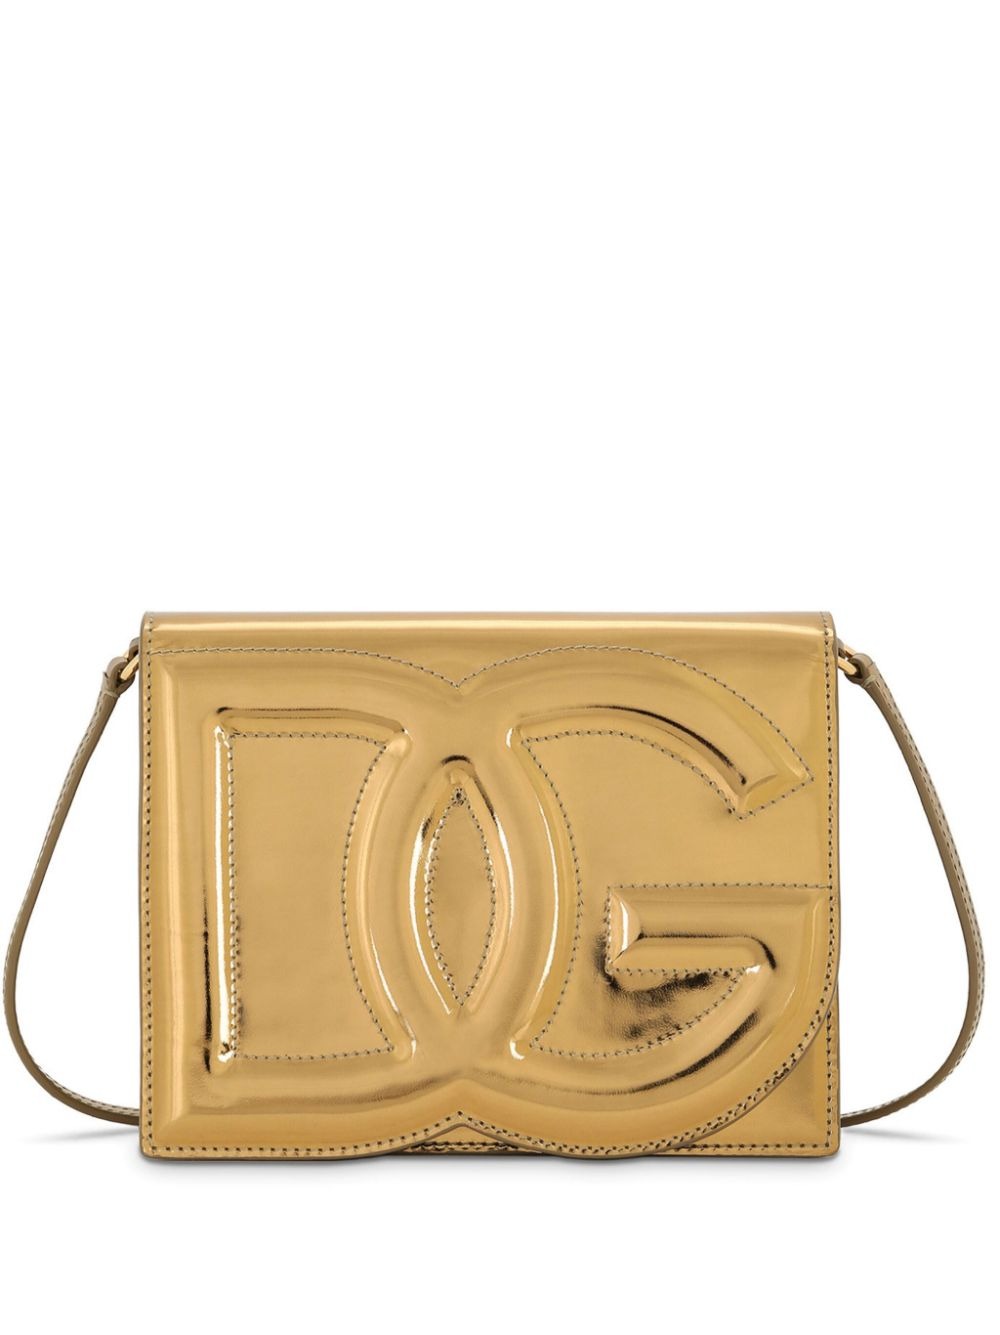 Dolce & Gabbana Light Gold Handbag